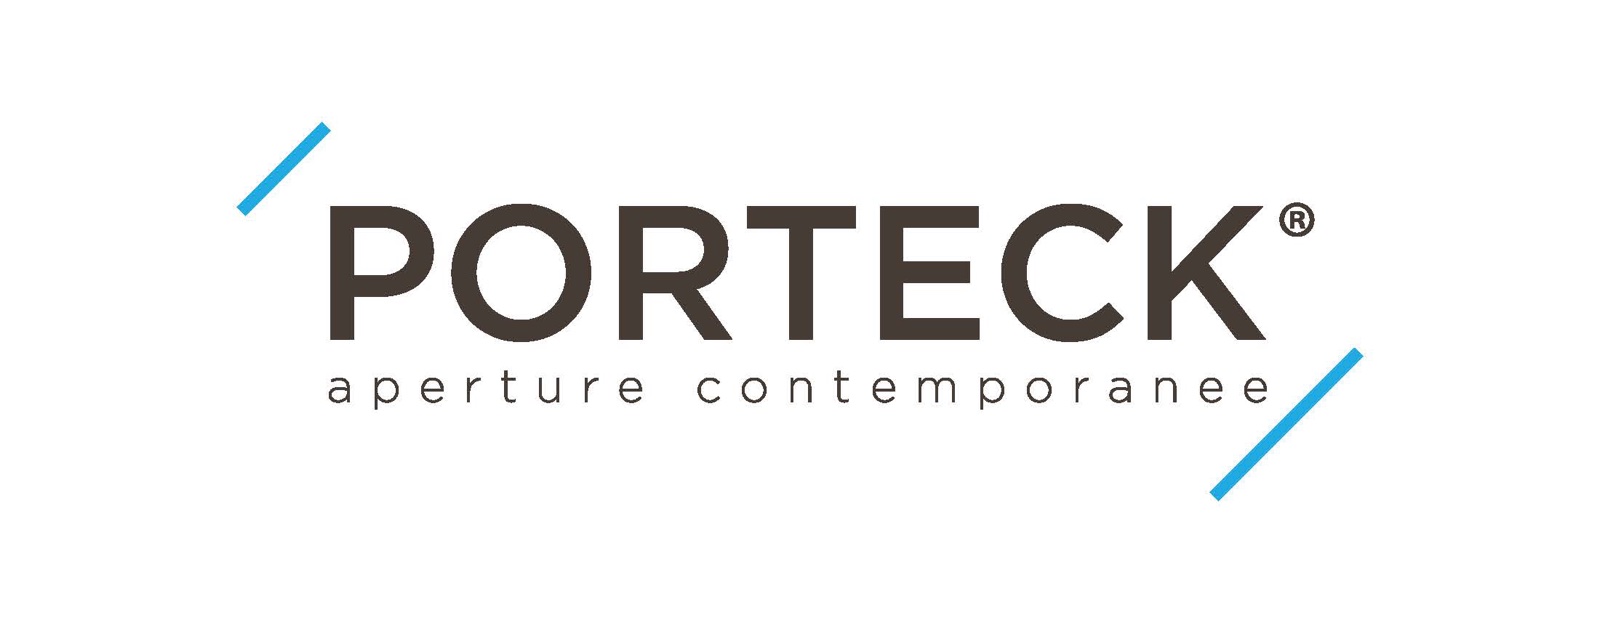 Porteck | Aperture Contemporanee